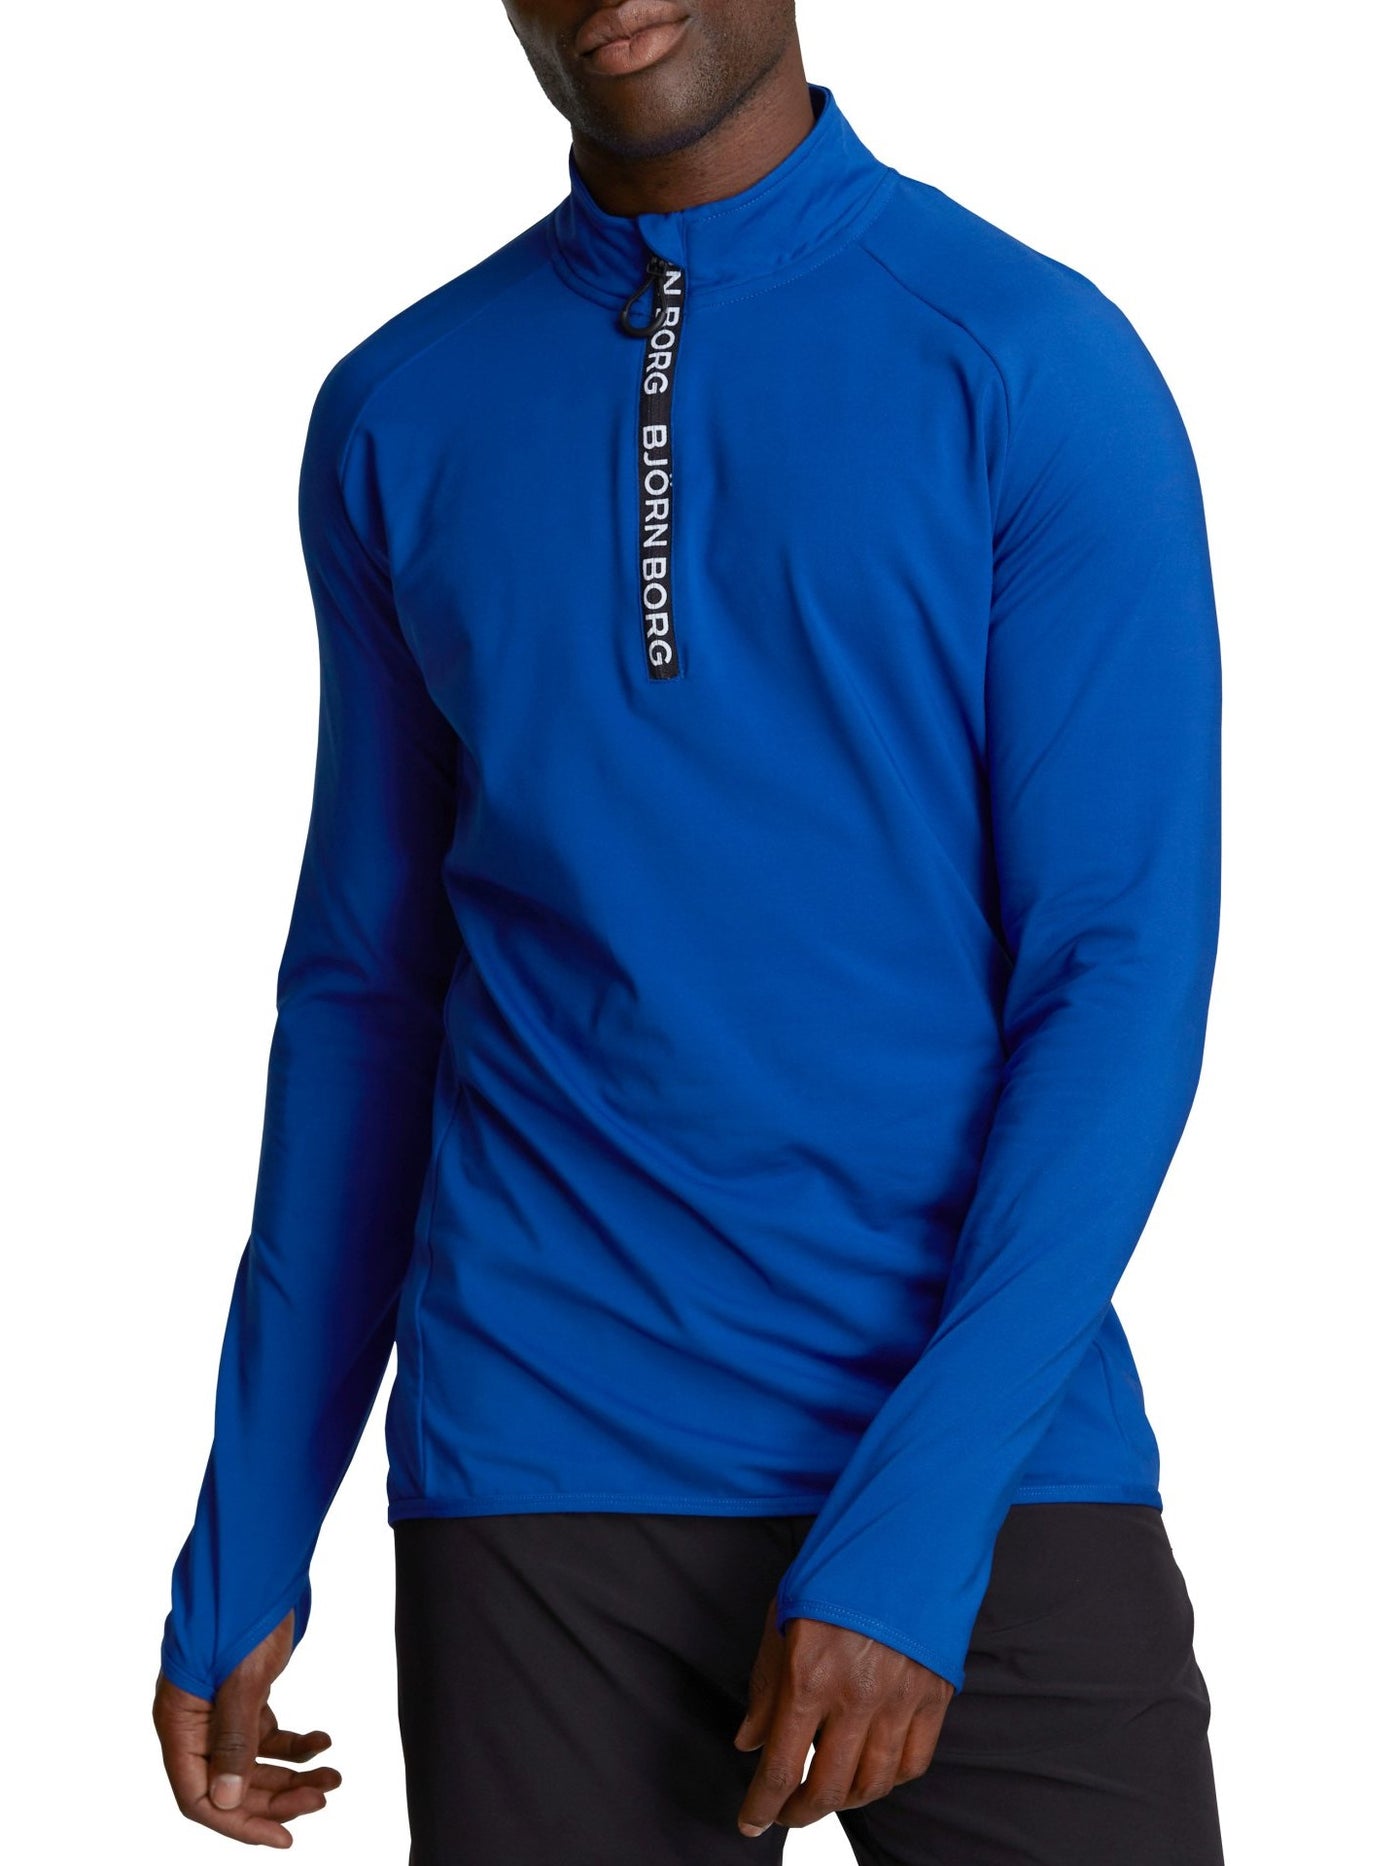 BJORN BORG Half Zip Polo Alve Men's Long Sleeve Training Top Blue - Activemen Clothing